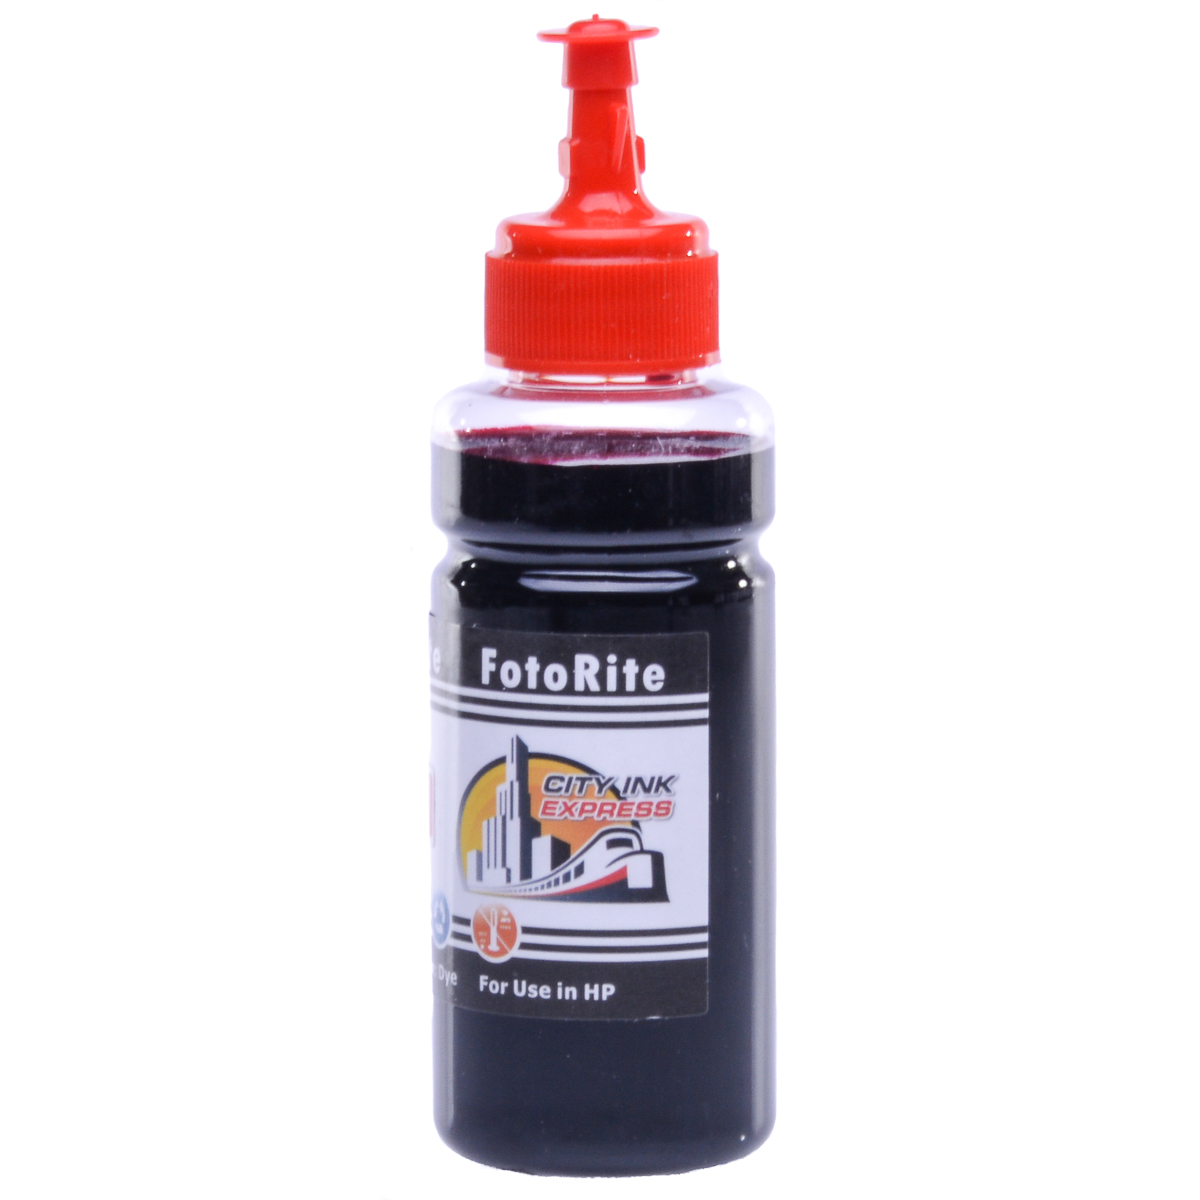 Cheap Magenta dye ink replaces HP Photosmart D7200 - HP 363